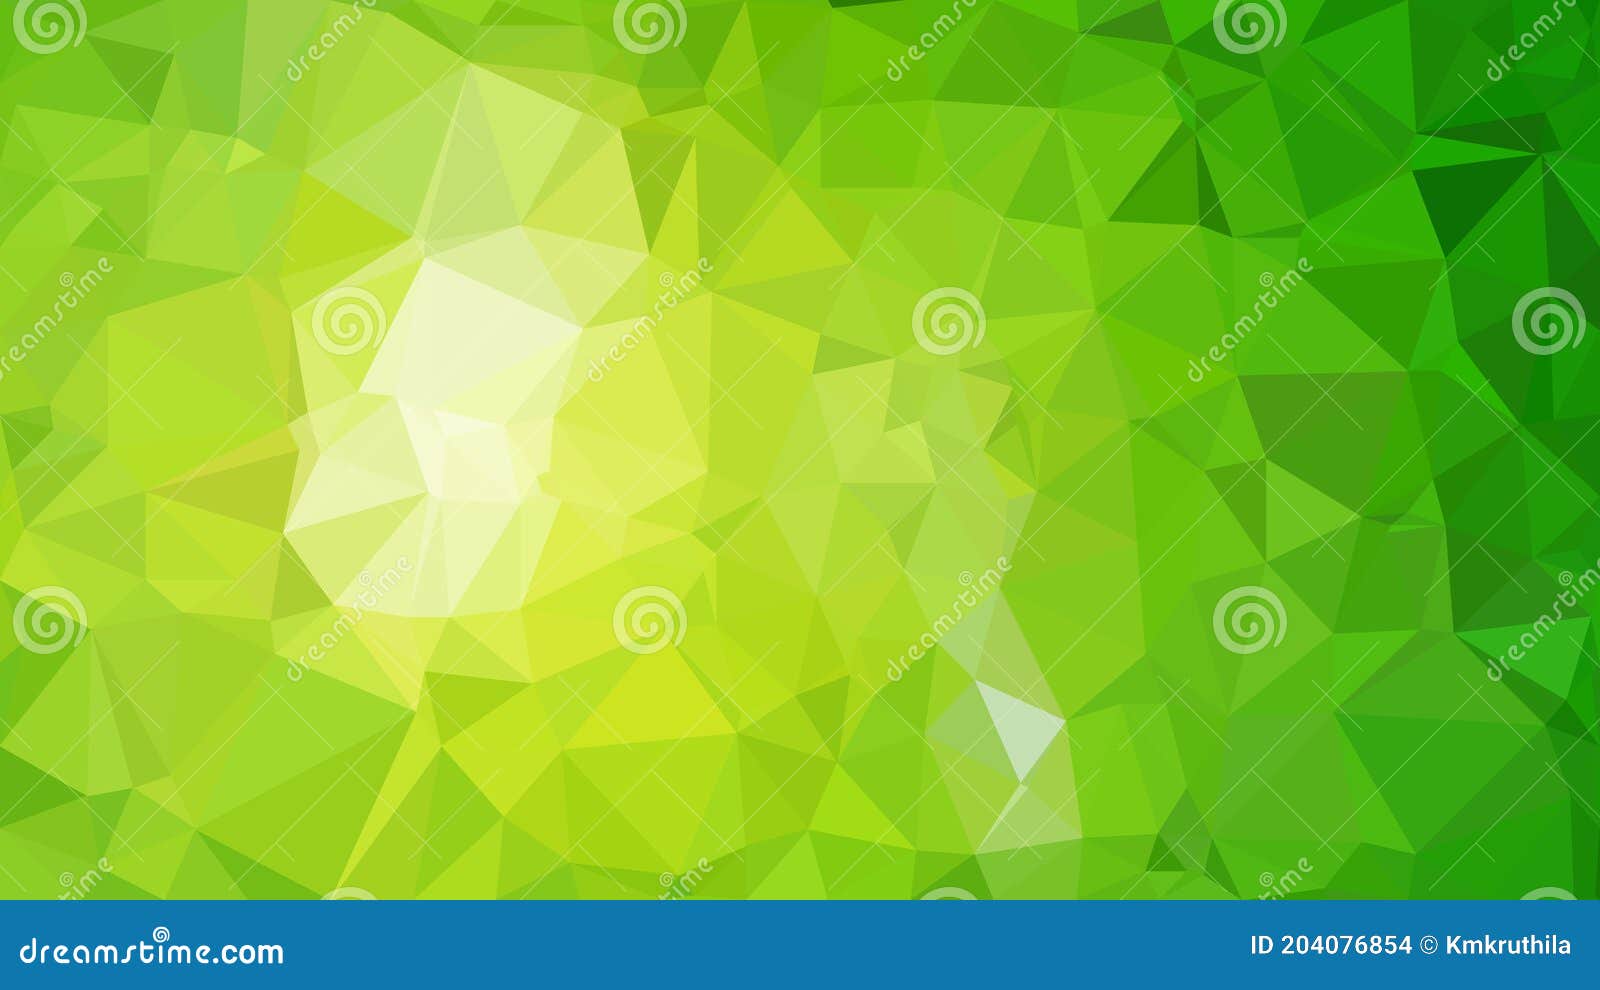 9. Lime Green and Yellow Polka Dot Nail Design - wide 9